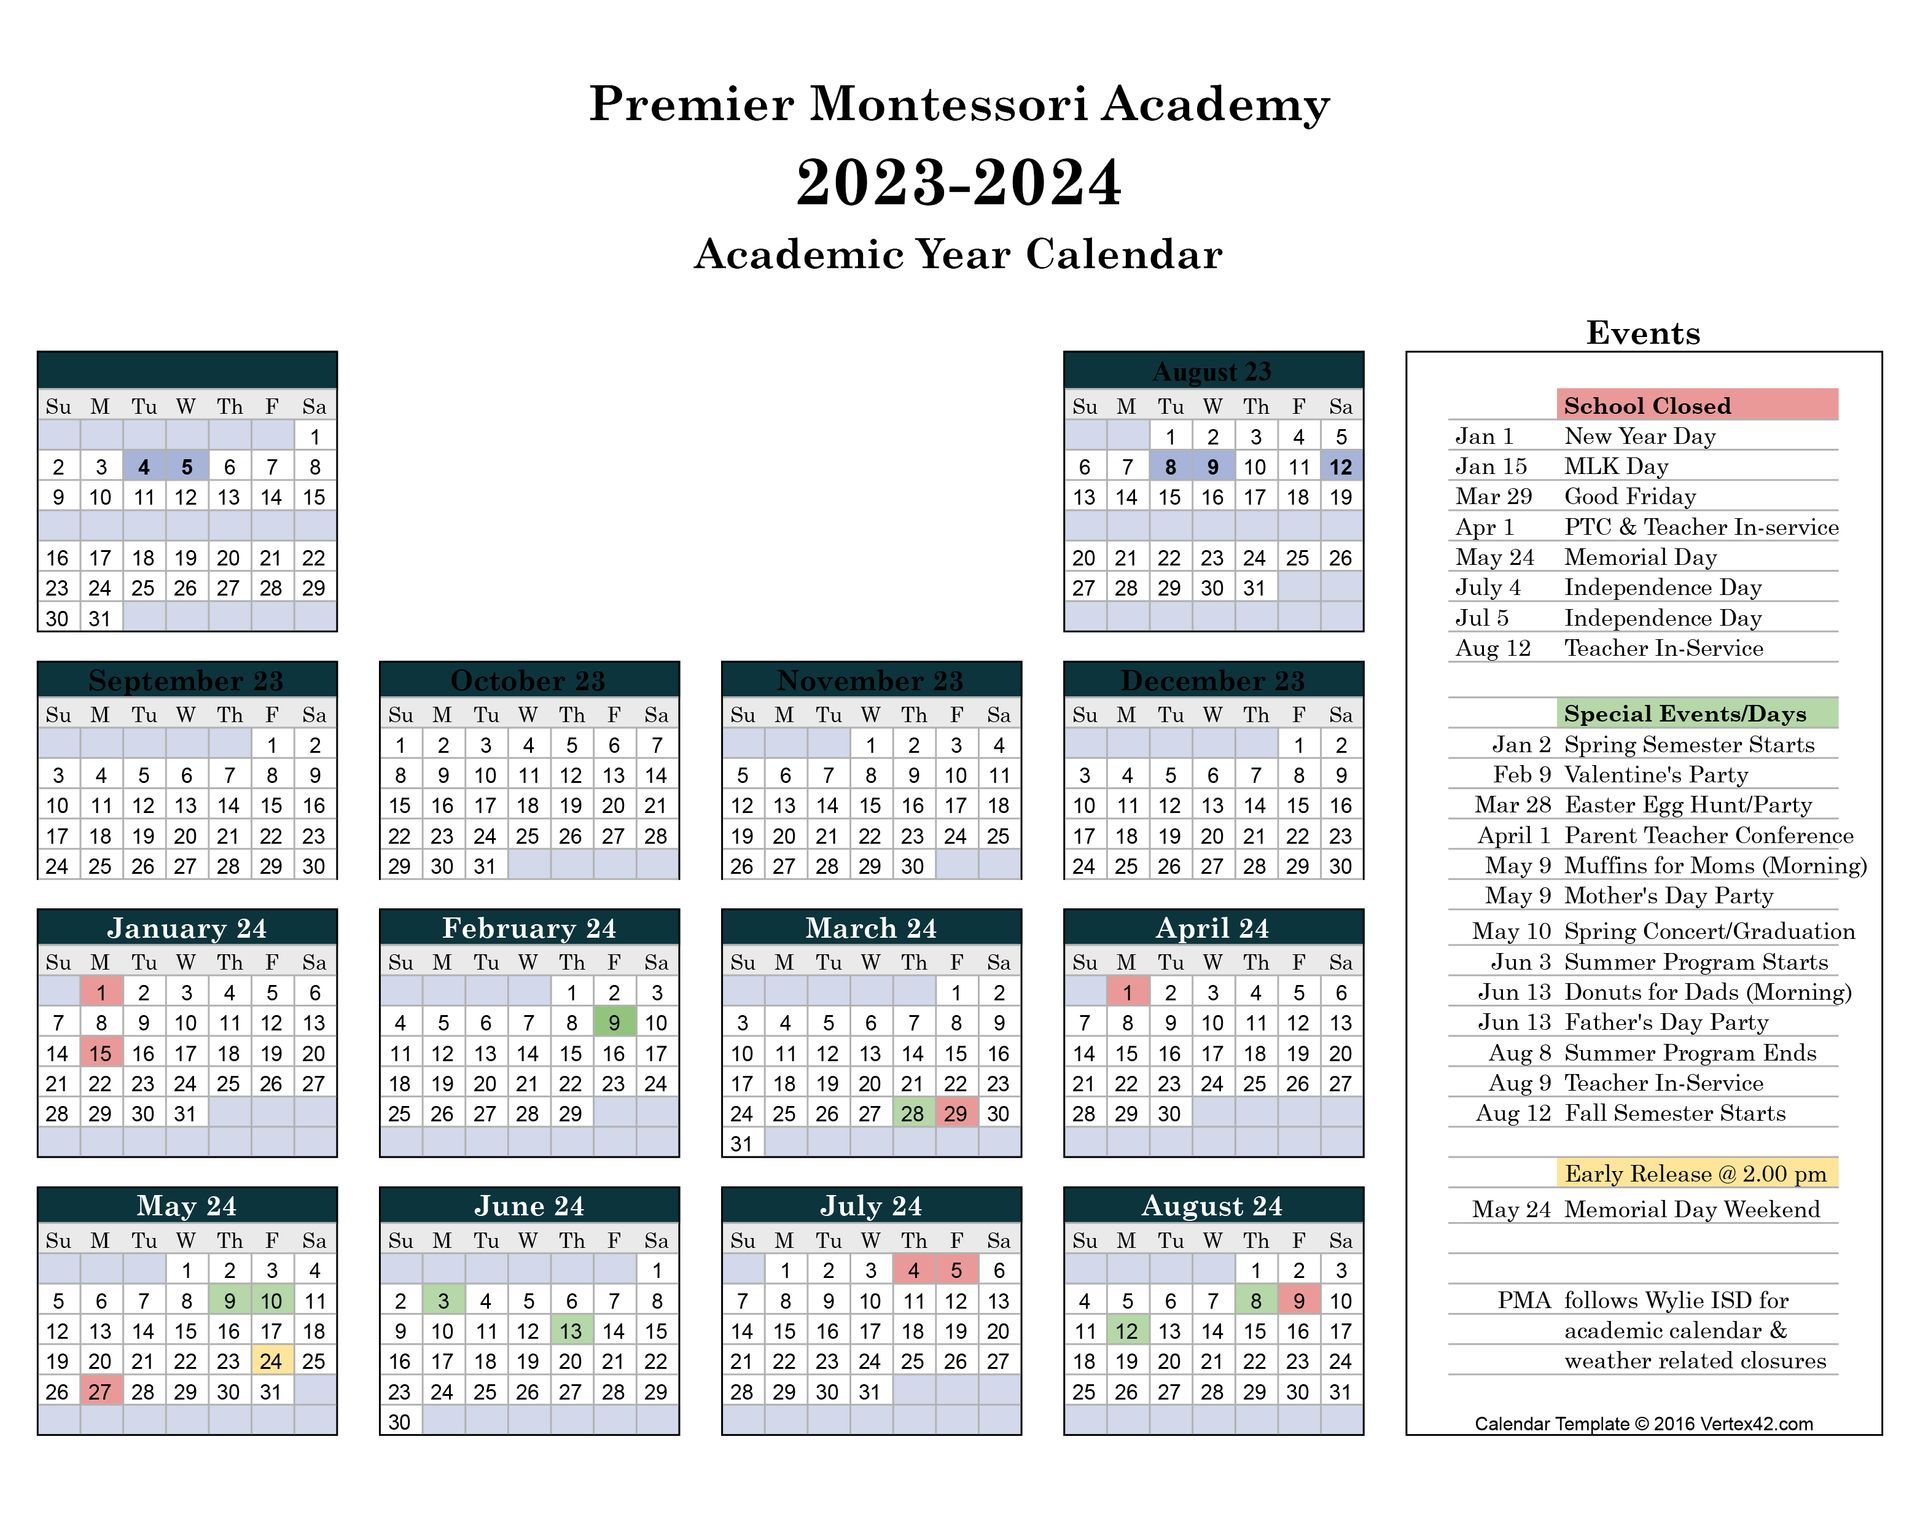 PMA School Calendar 2023-2024